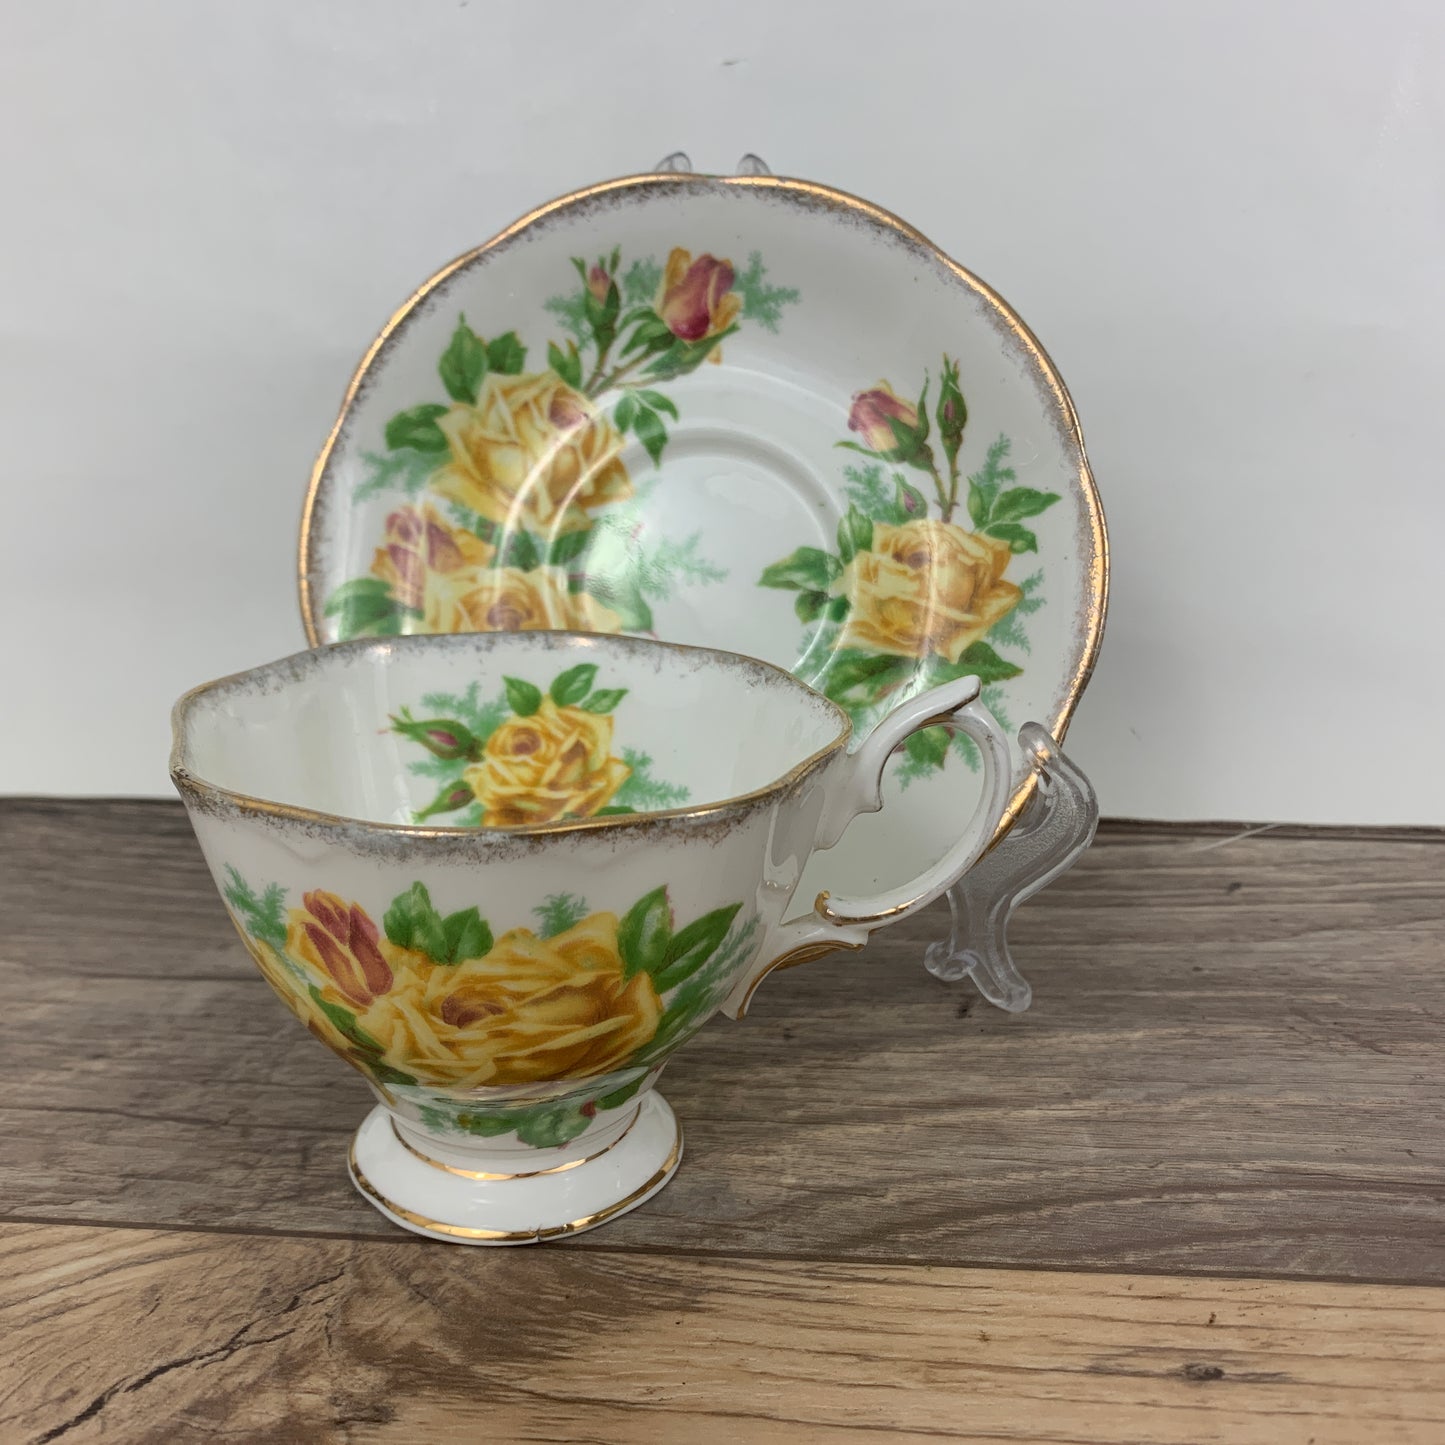 Vintage Royal Albert Tea Rose Tea Cup with Yellow Roses